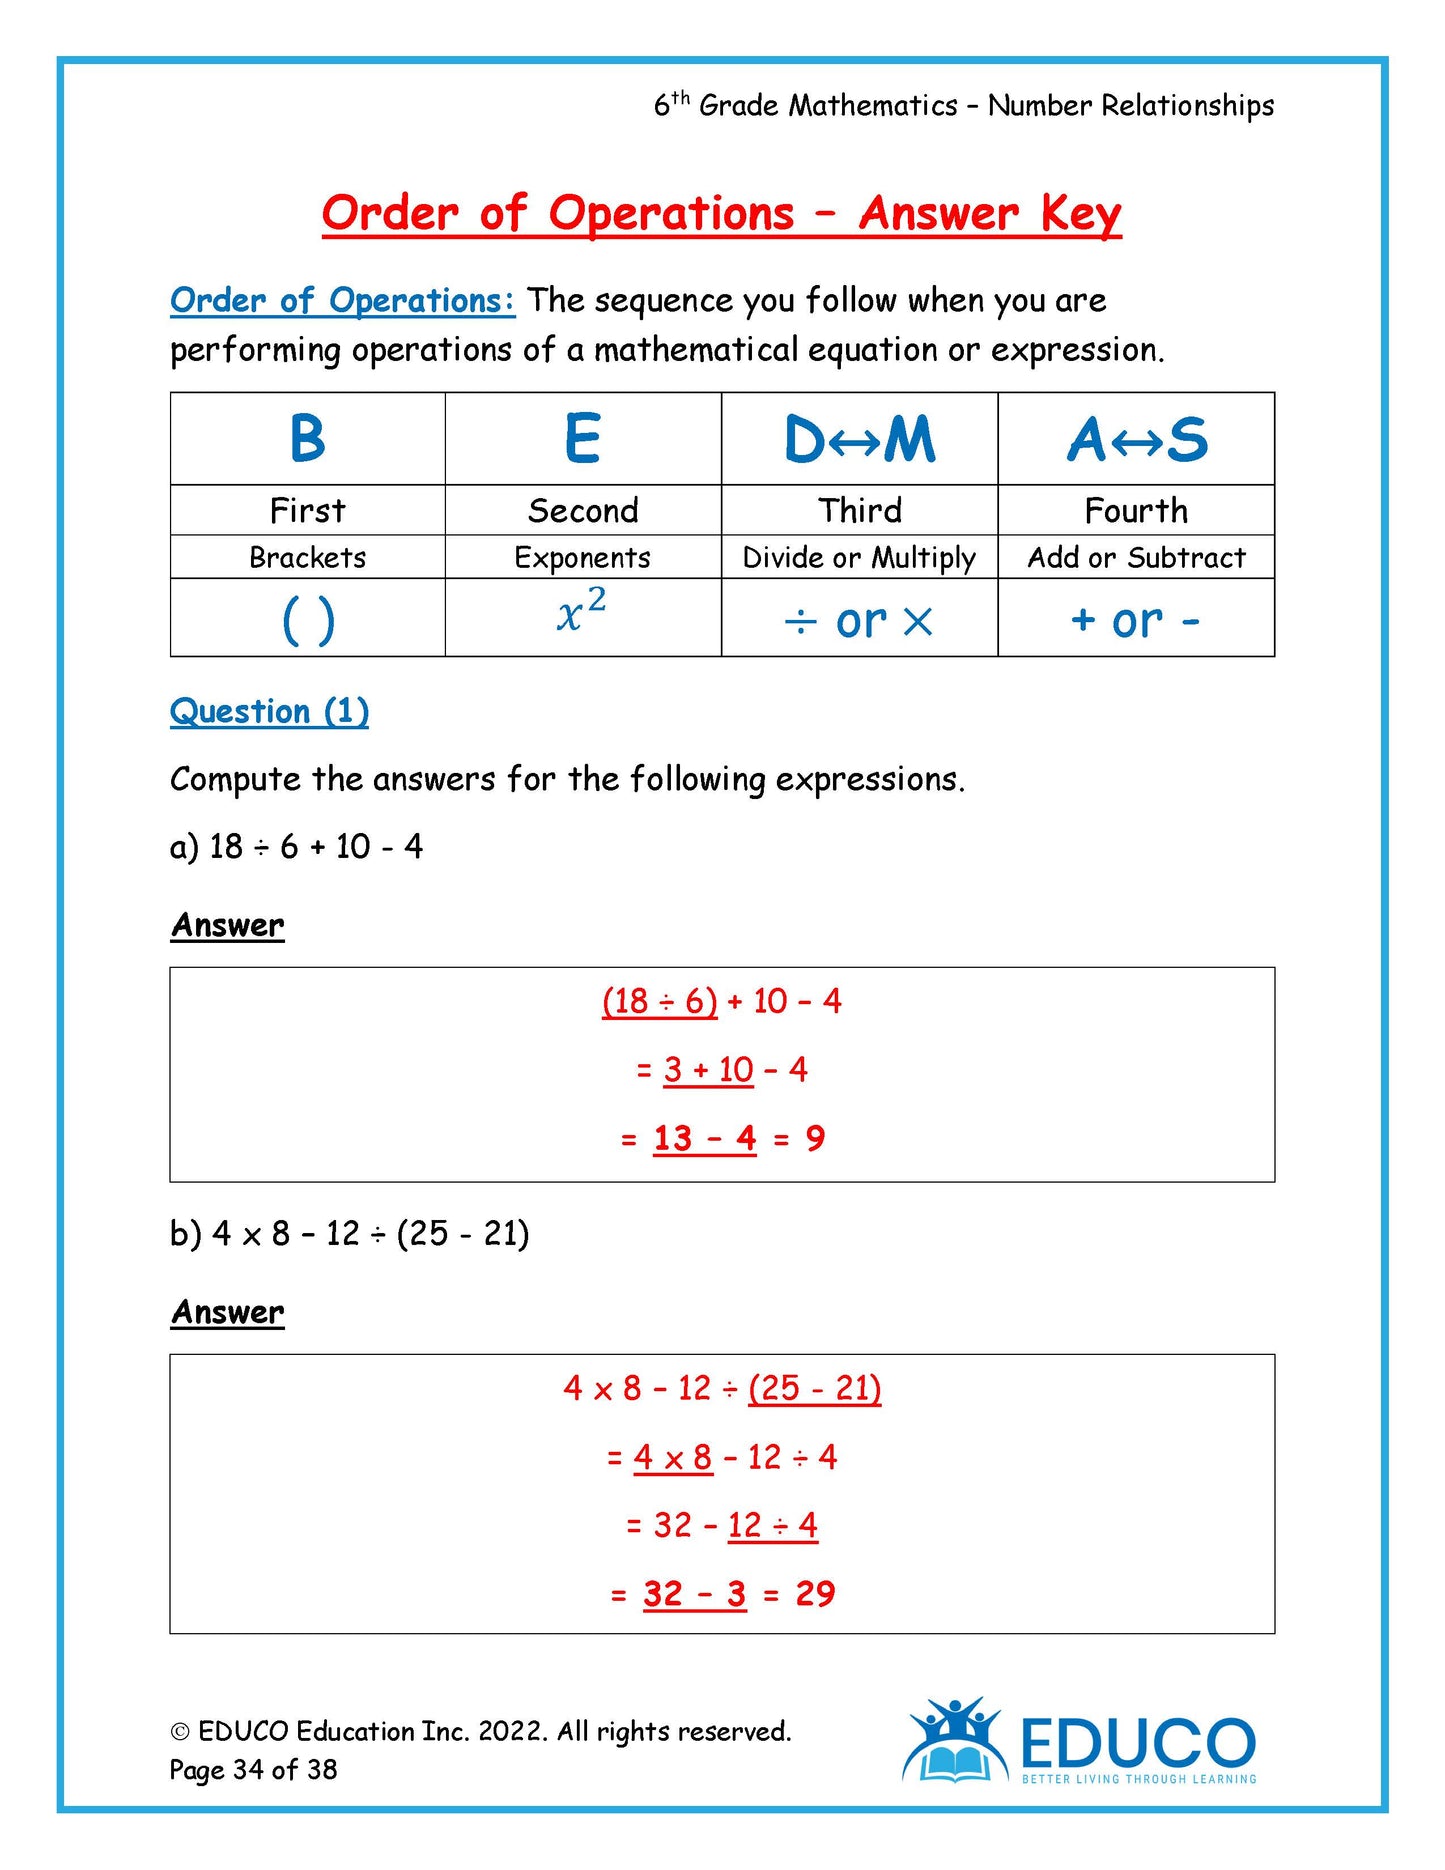 Grade 6 Math Workbook - Part 1 of 3 (Physical Workbook)